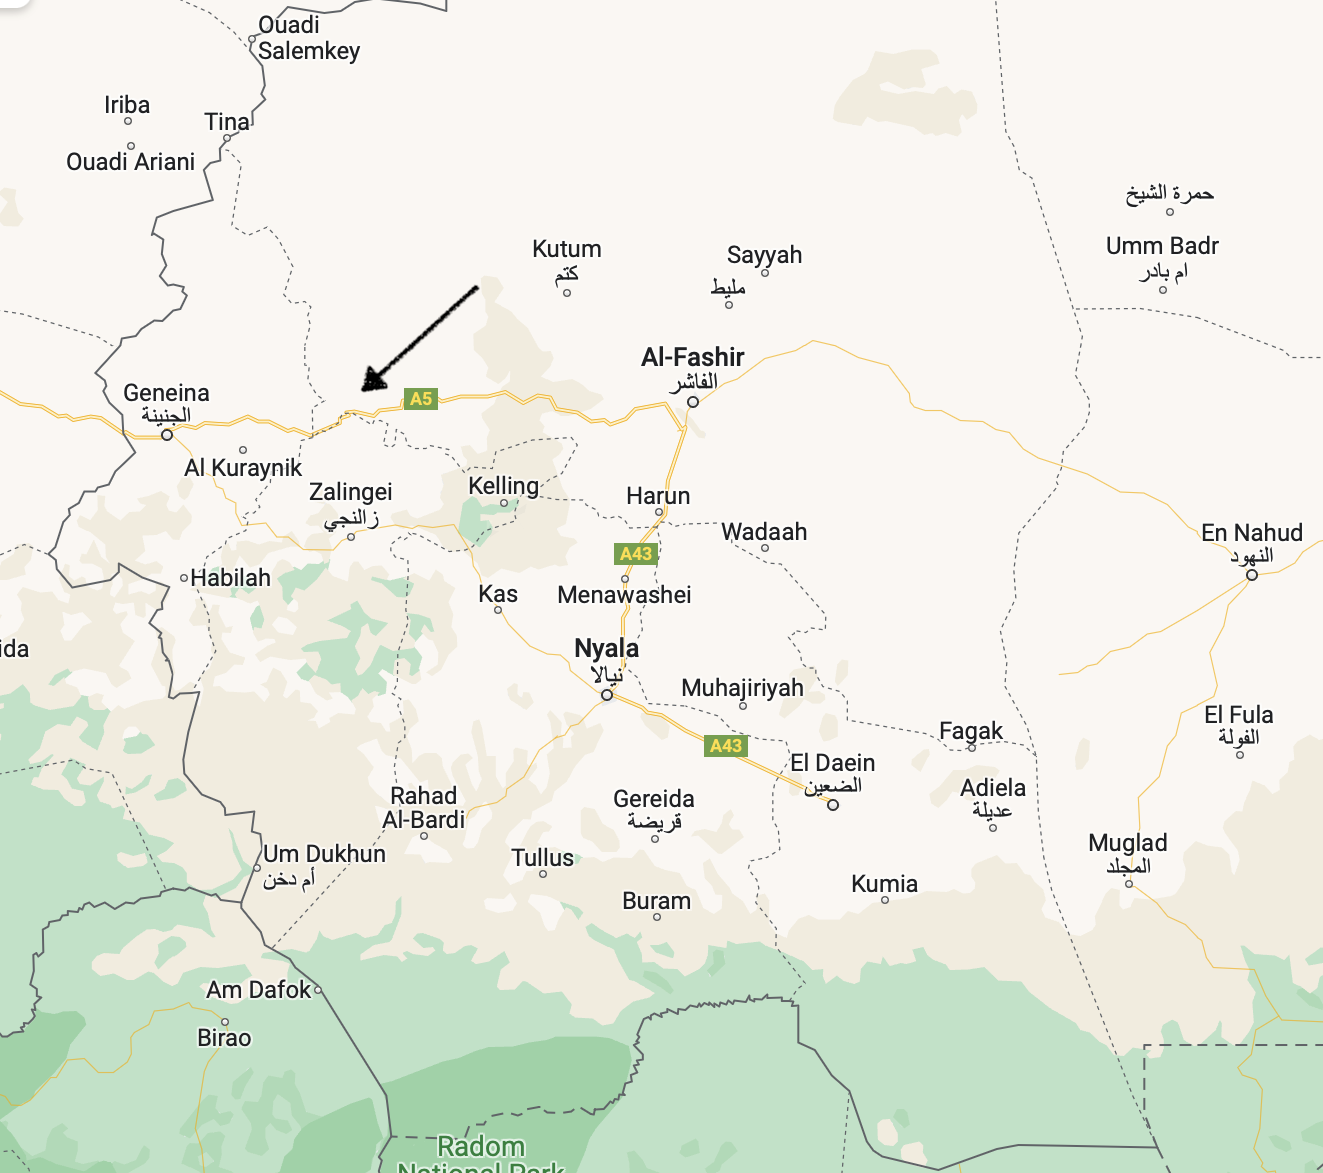 Darfur occidental